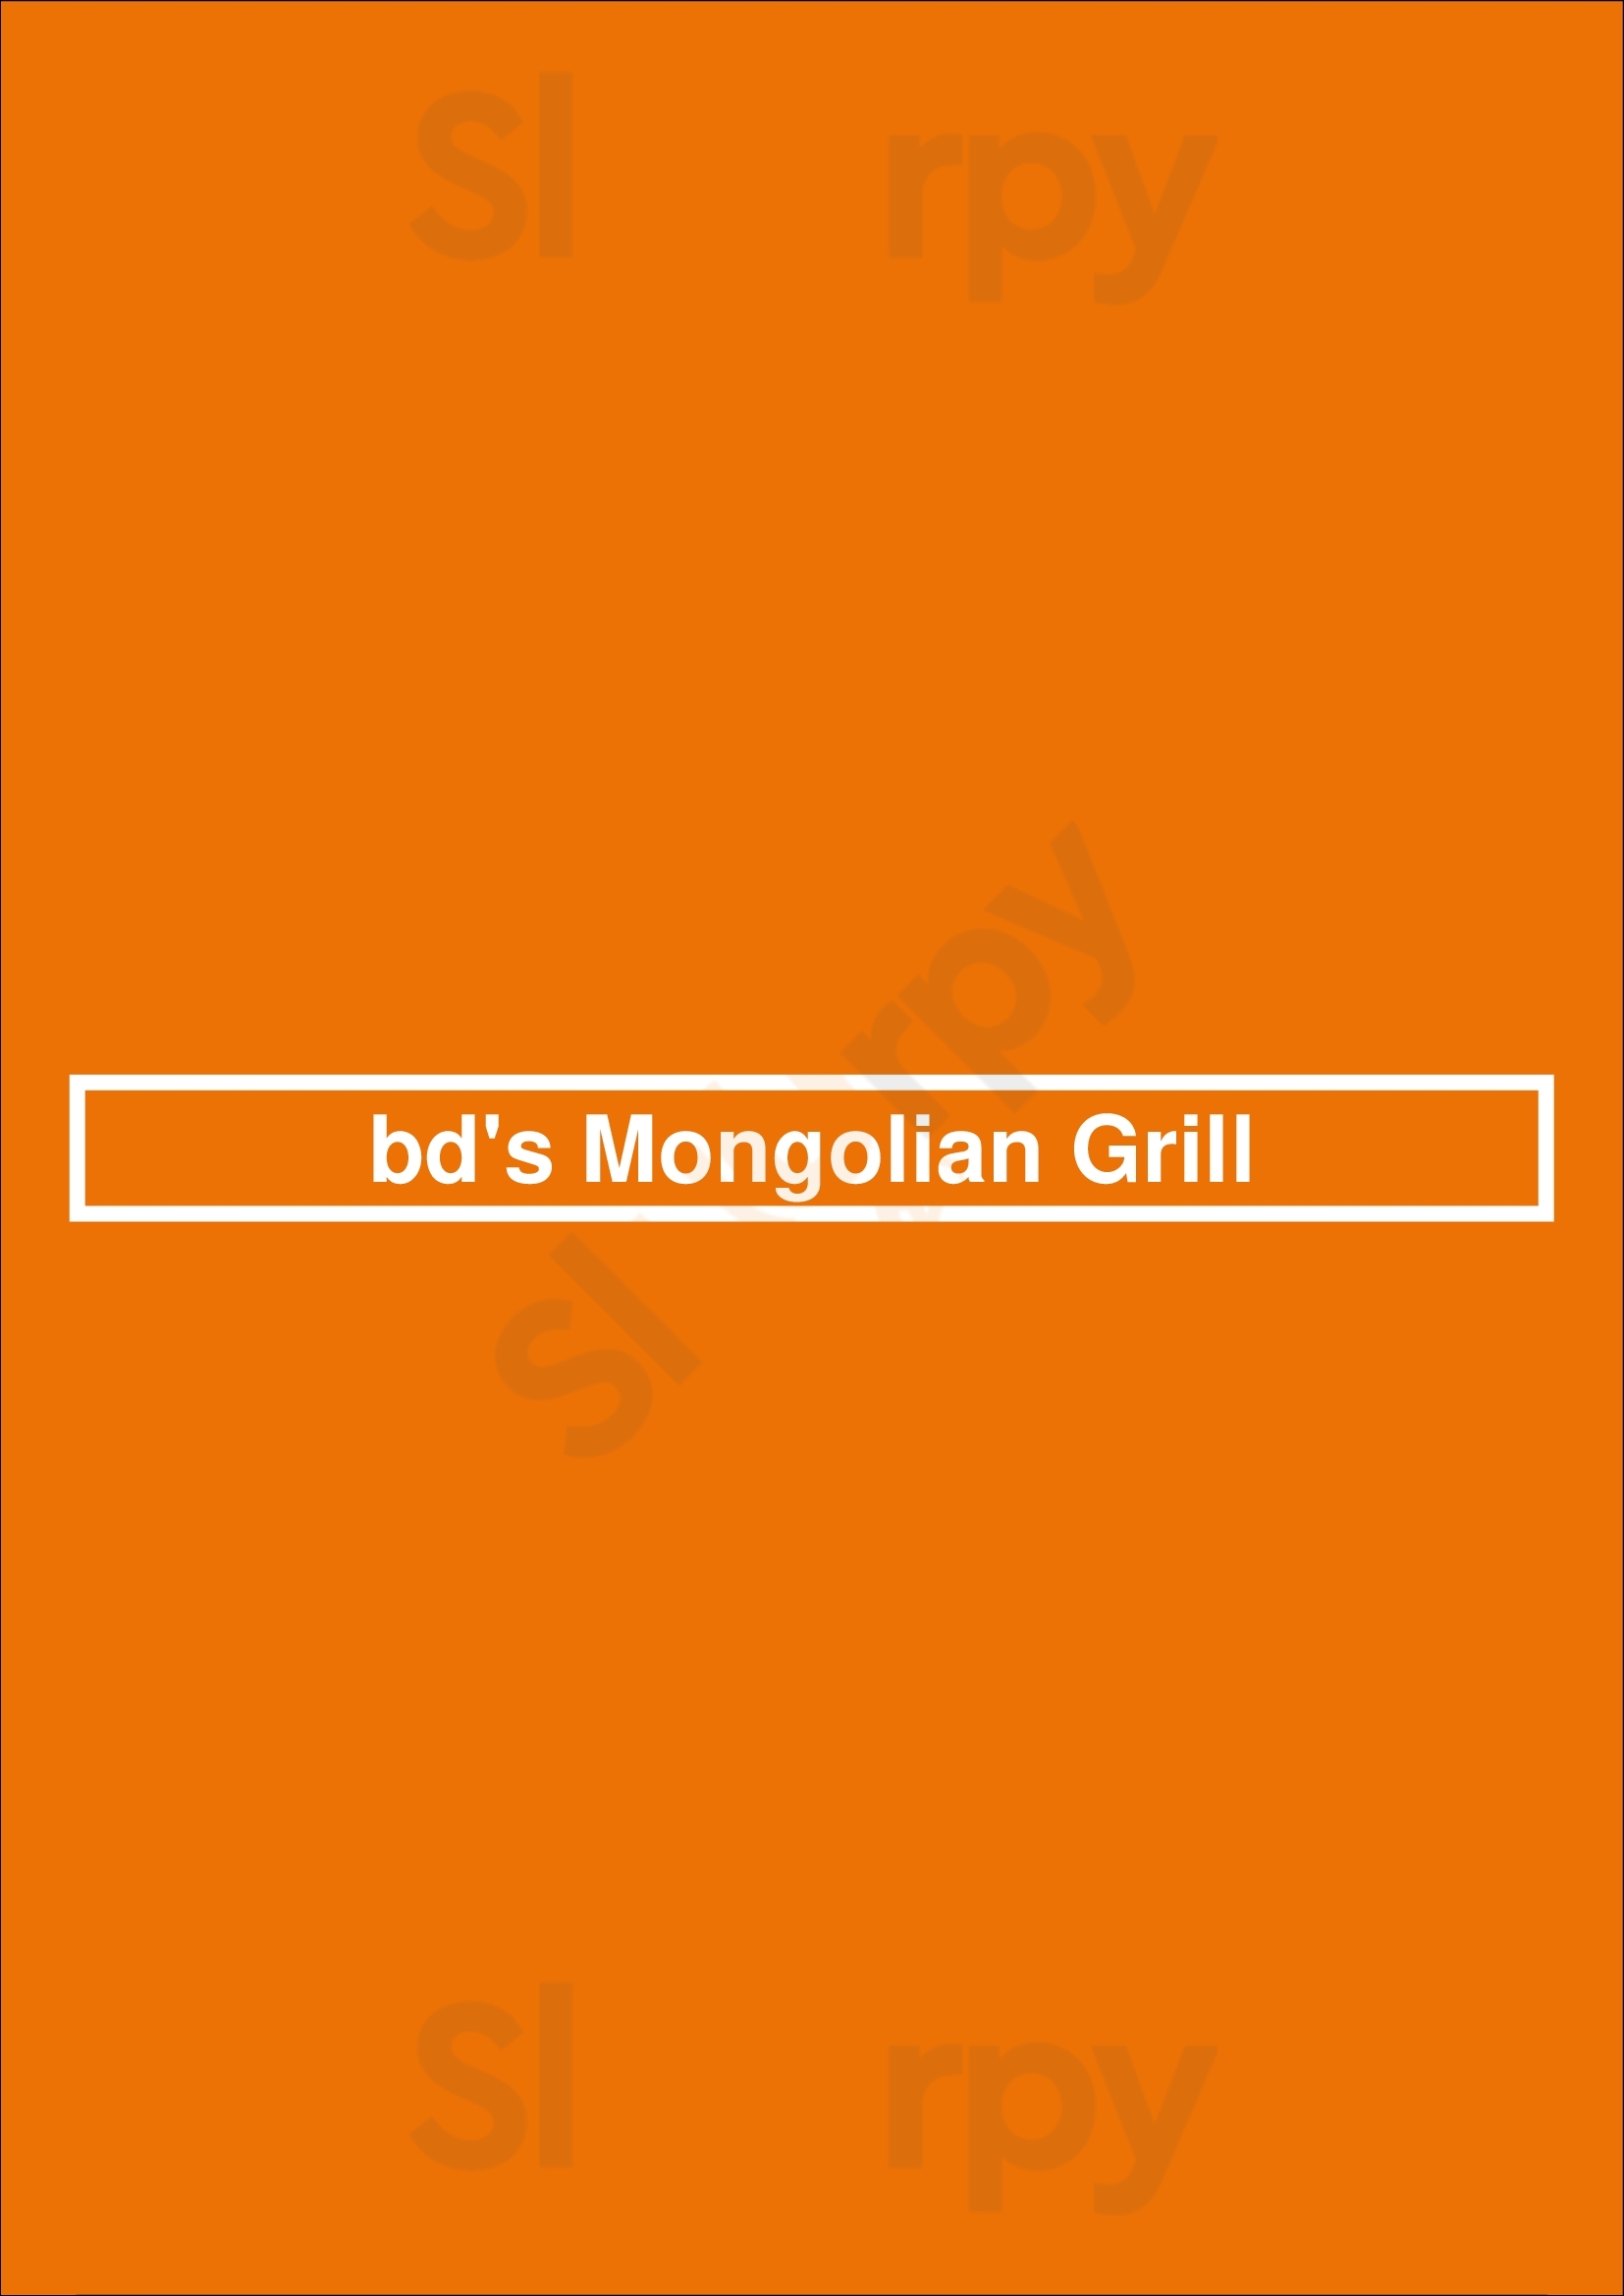 Bd's Mongolian Grill Columbus Menu - 1